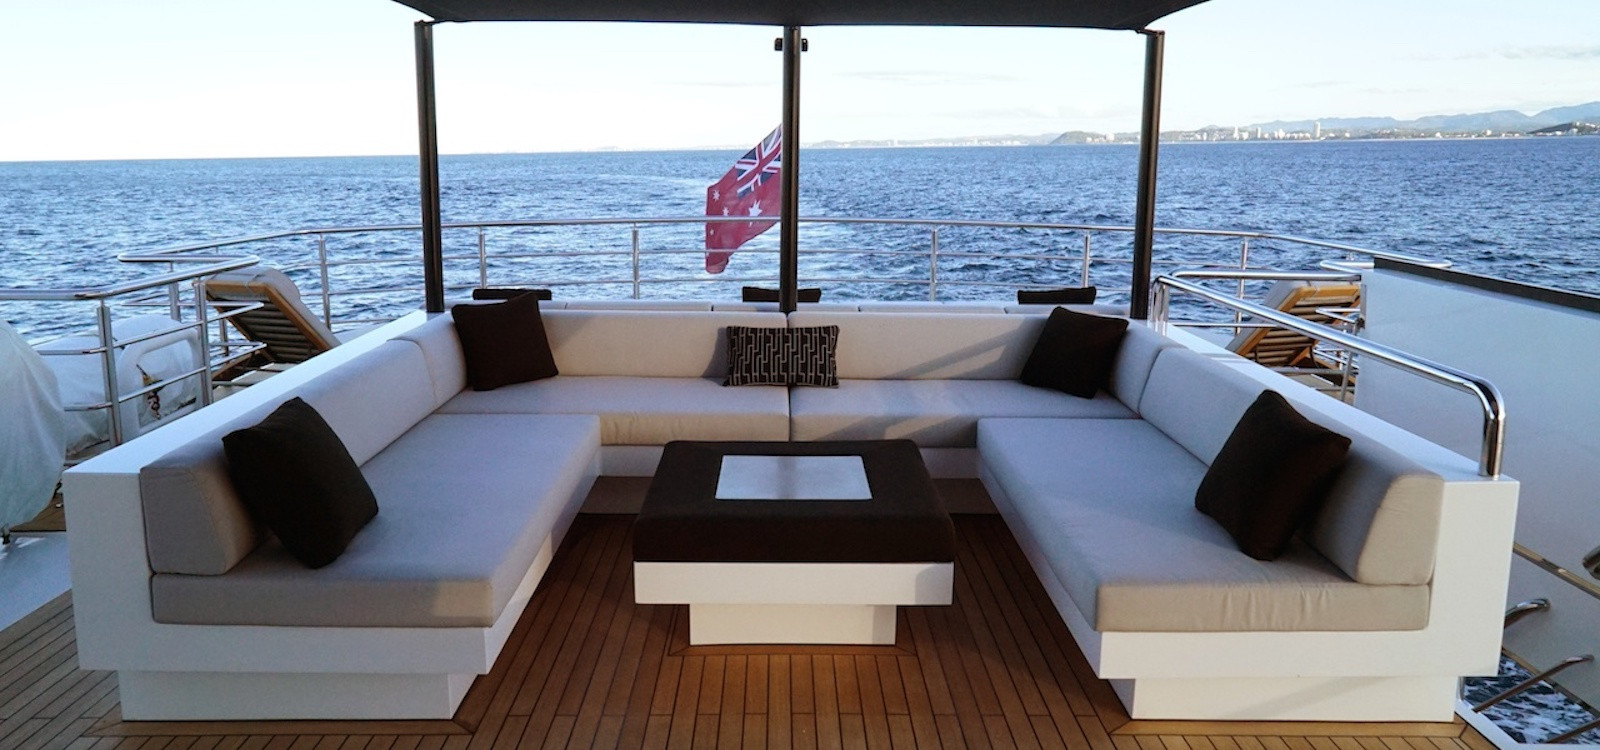 Top deck lounges on Sahana new years eve cruise